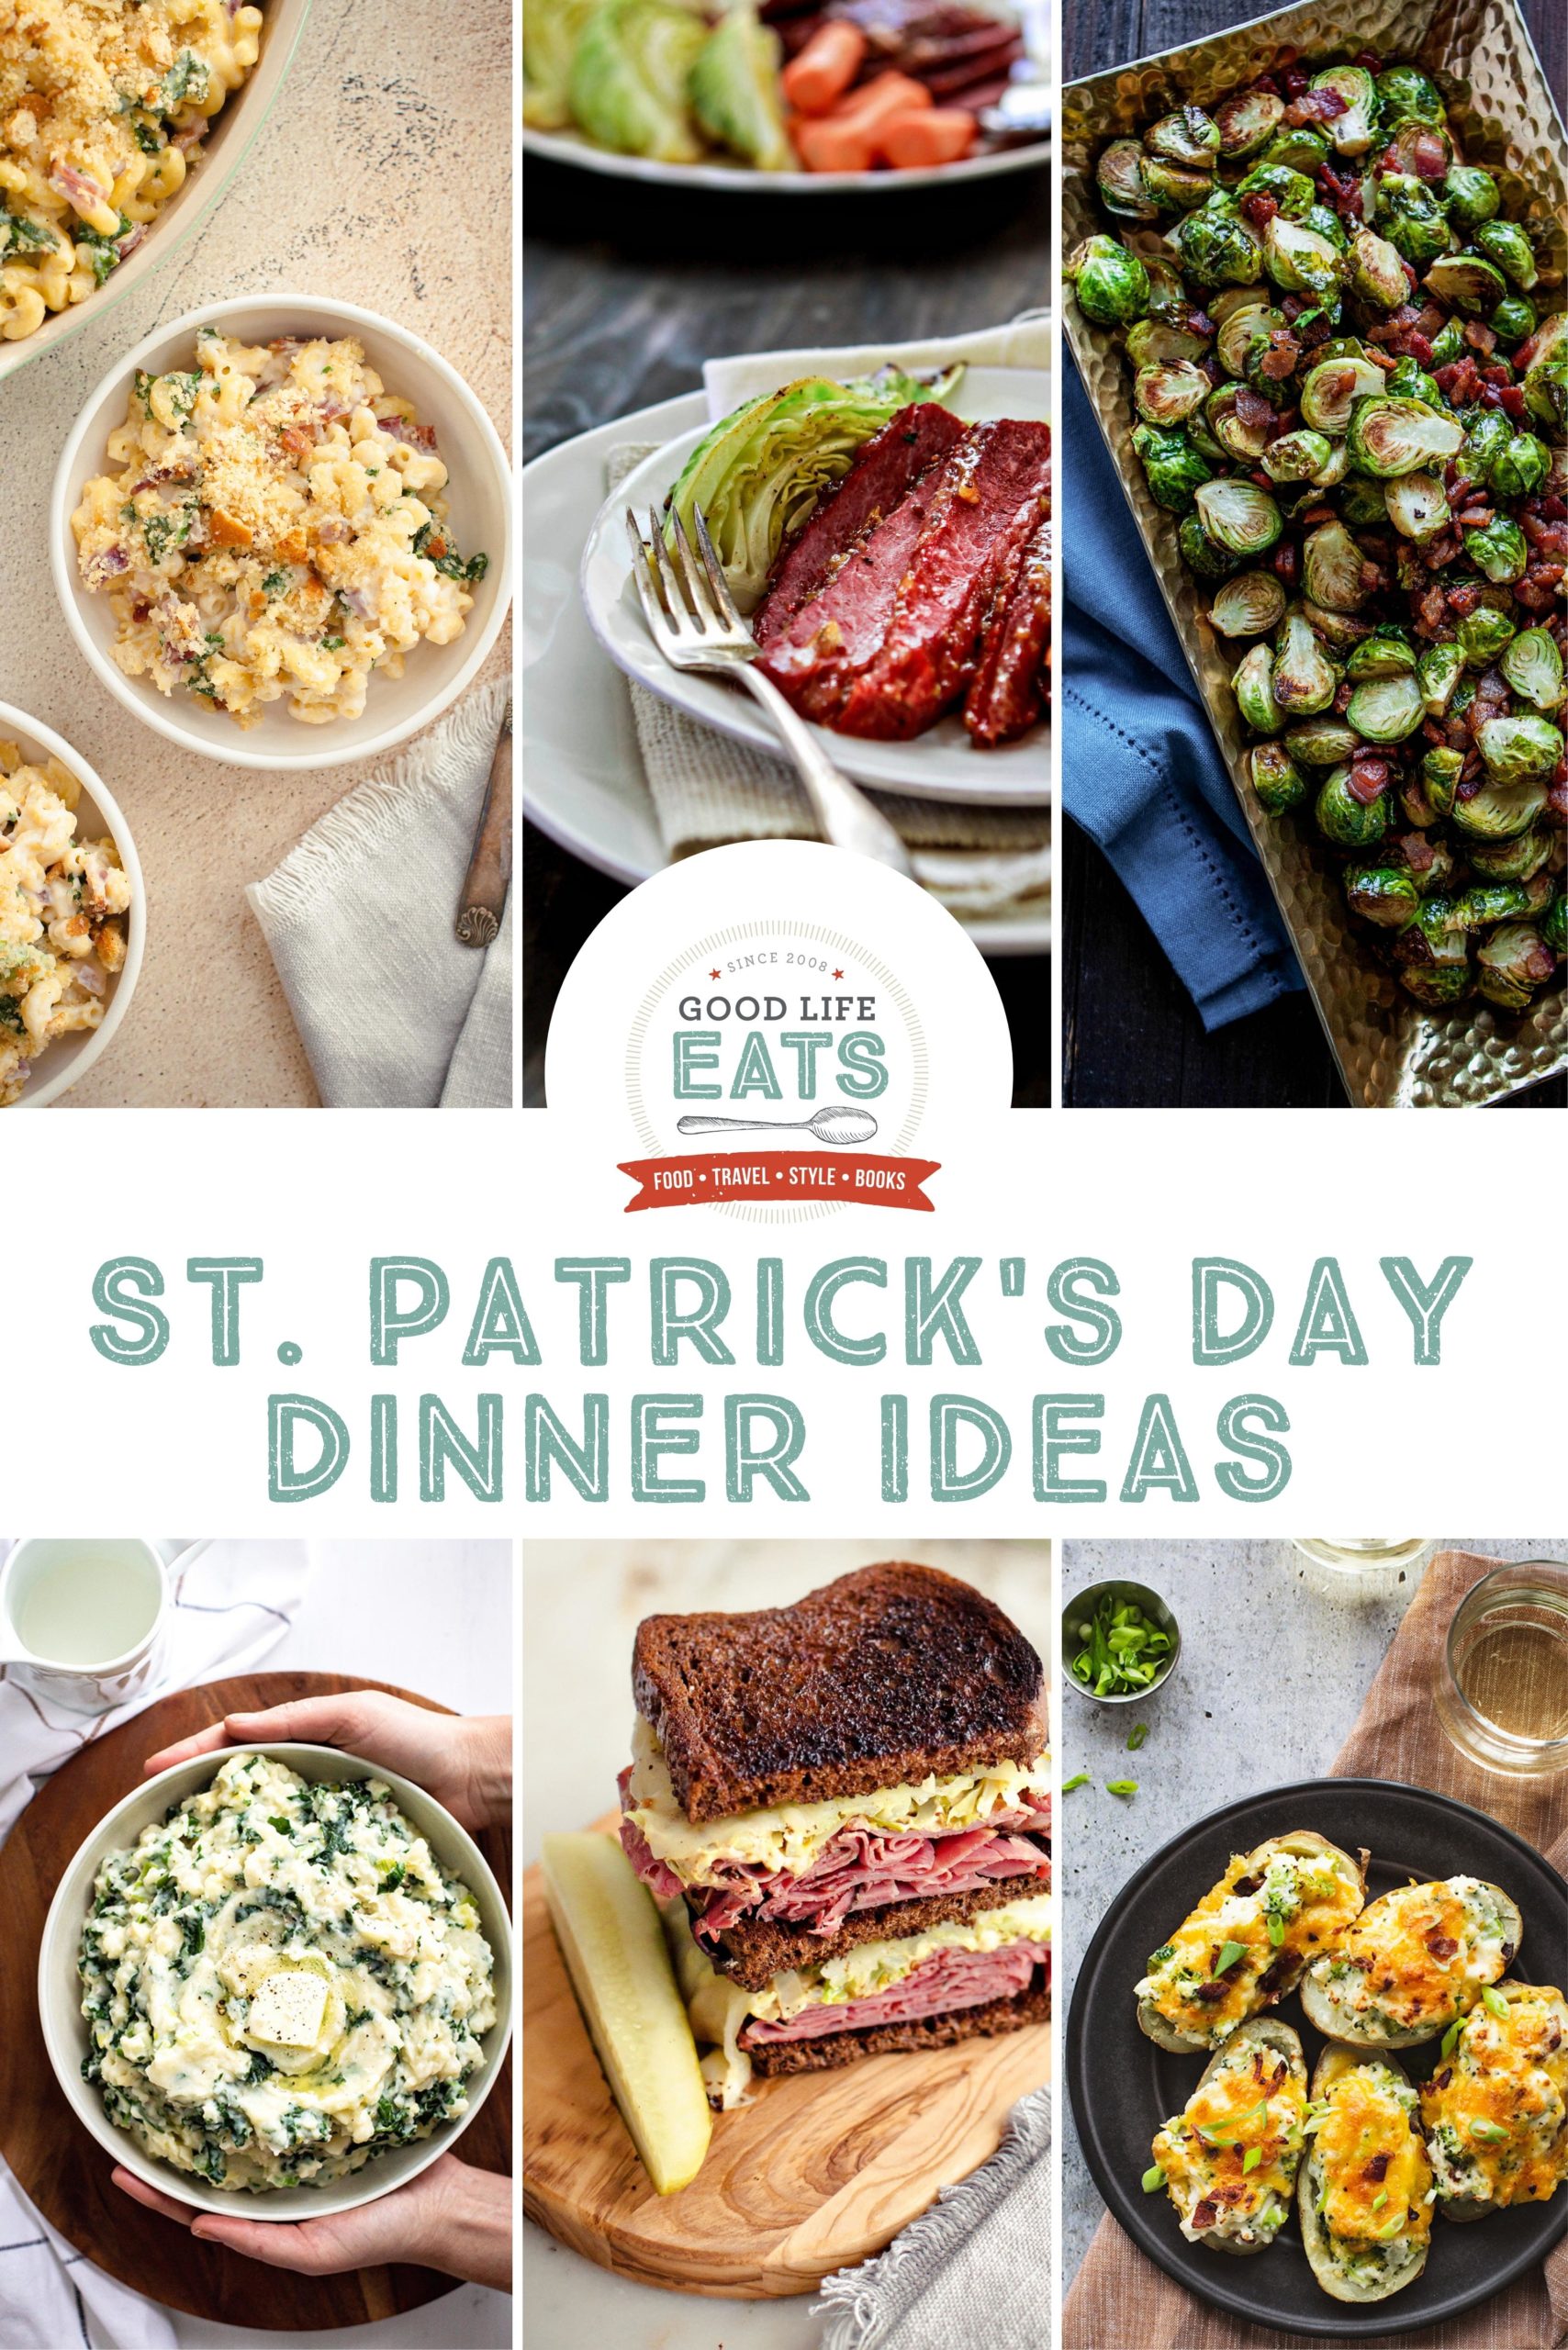 https://www.goodlifeeats.com/wp-content/uploads/2022/03/St-Patricks-Day-Dinner-Recipes-scaled.jpg